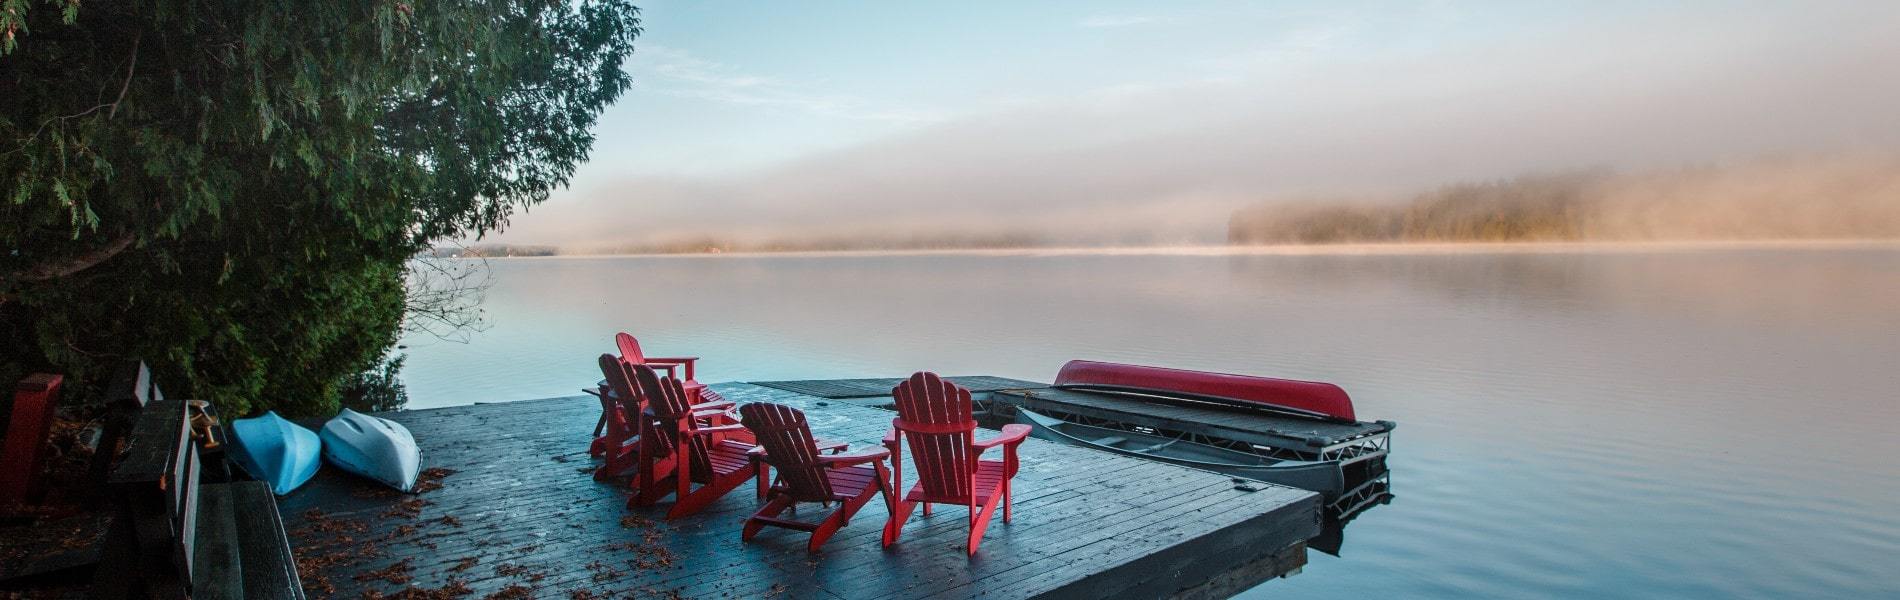 Muskoka chairs on an Ontario Lake